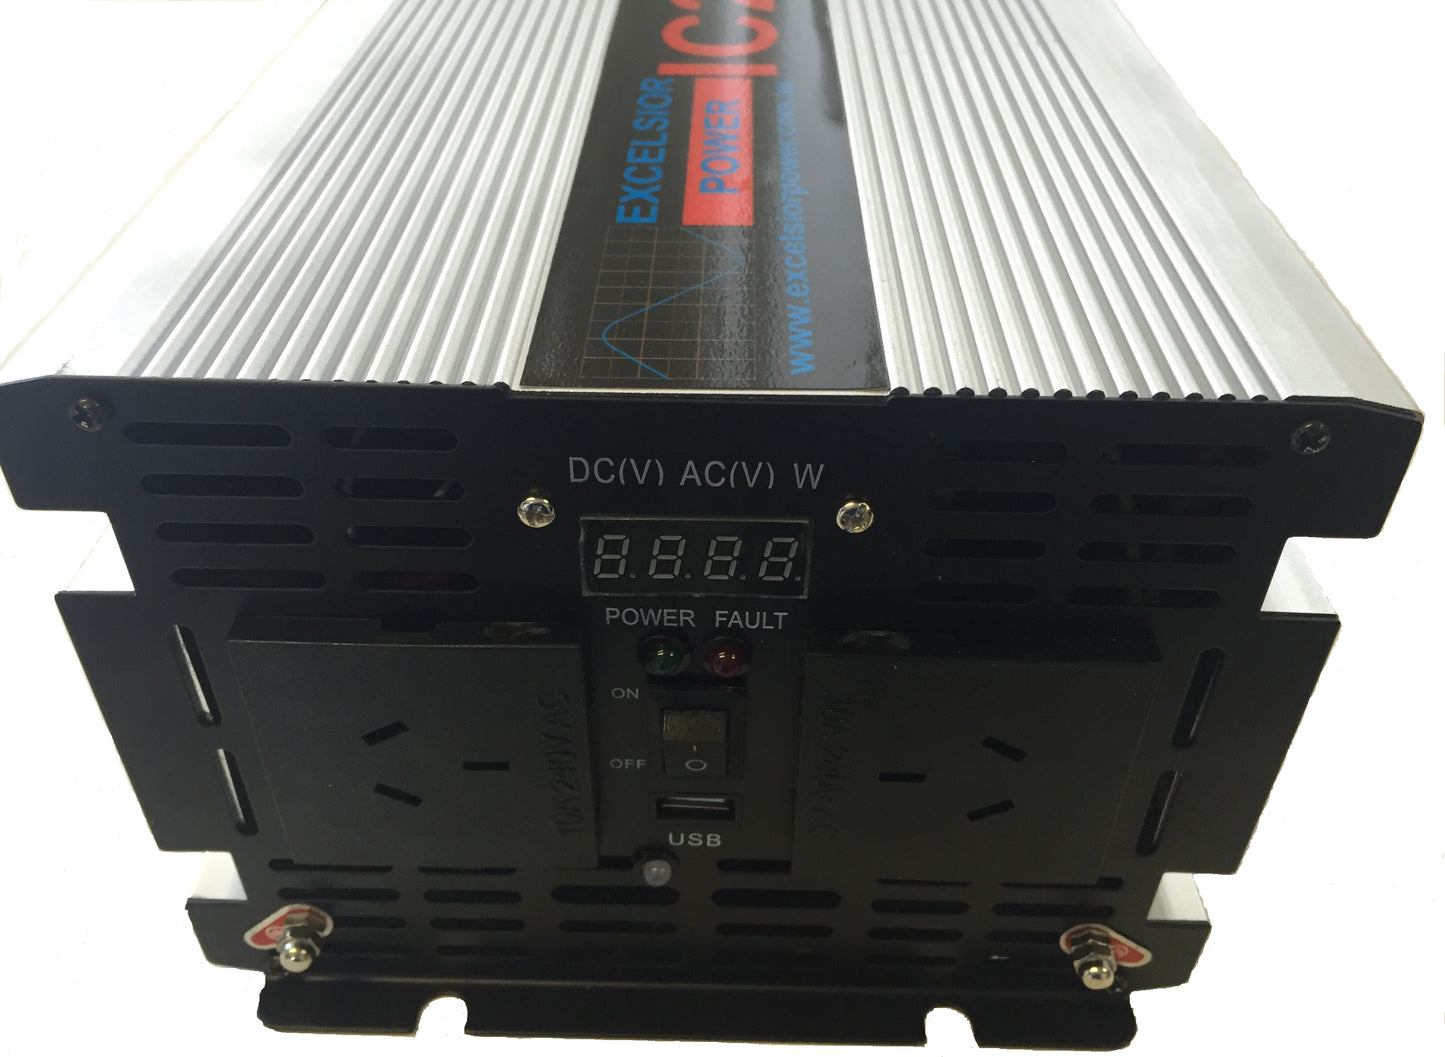 Inverter Charger, 6000 watt Surge, 24 volt, IC3000/24